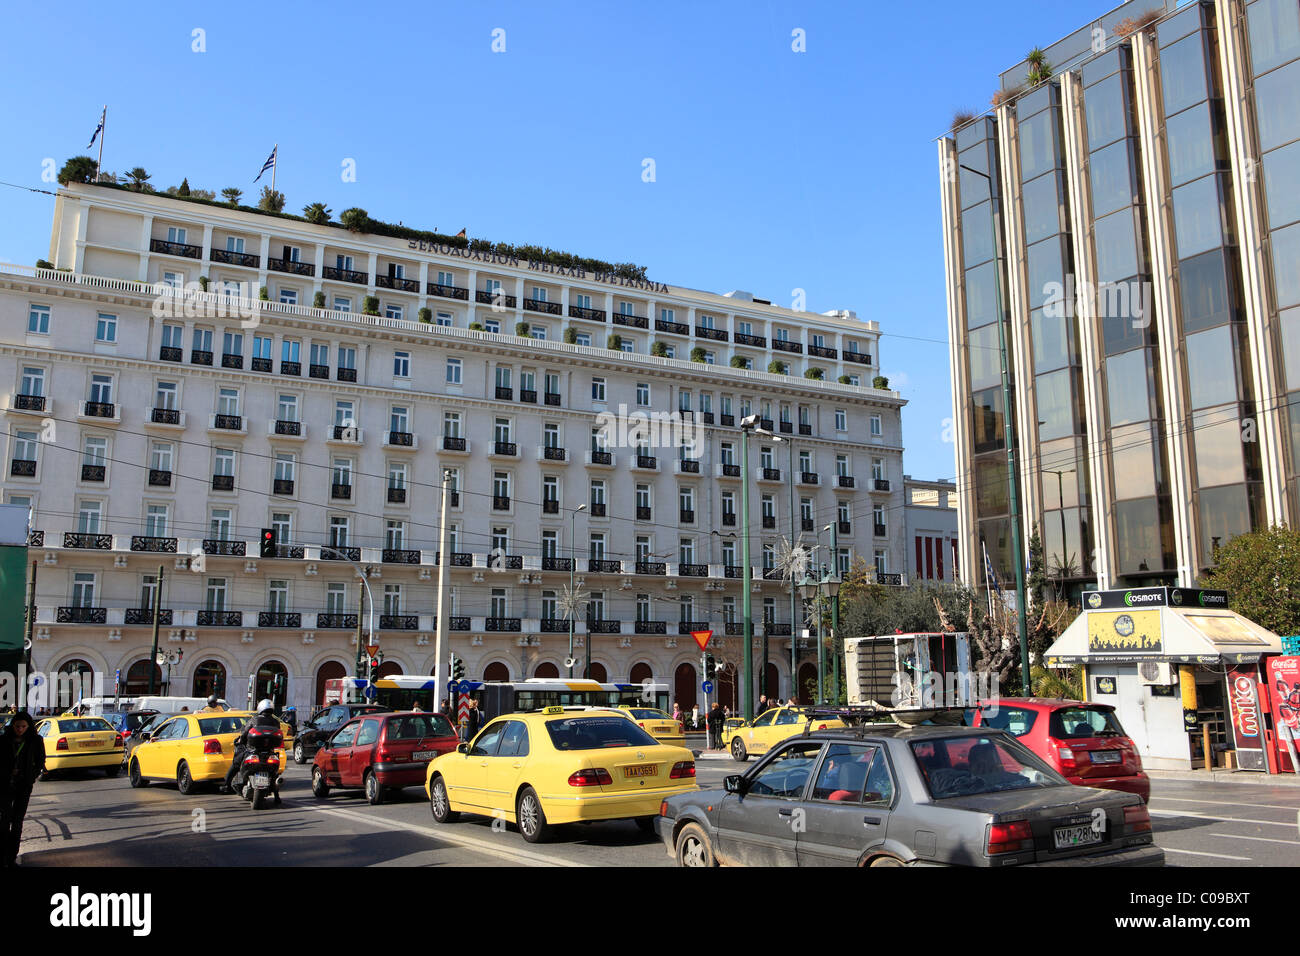 europe greece athens vas sofias avenue looking towards the grande bretagne hotel Stock Photo